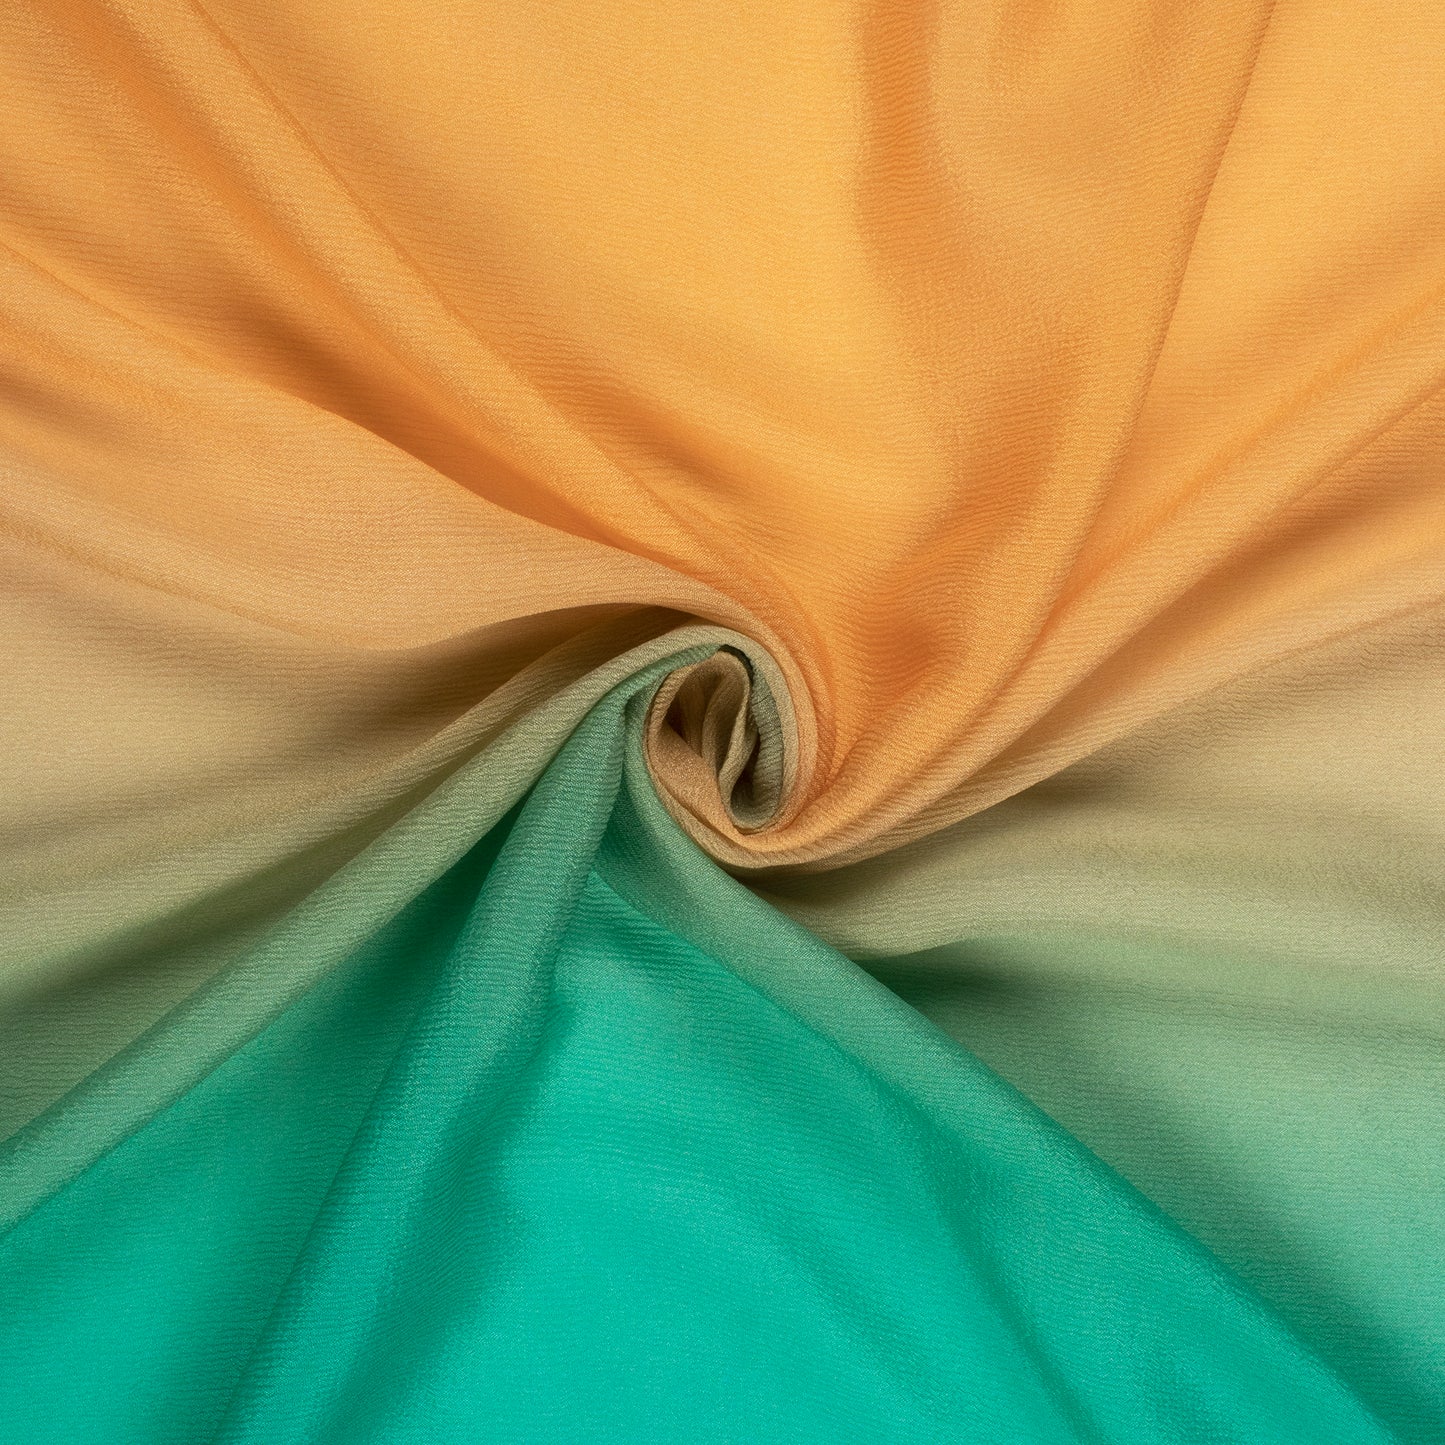 Teal Blue Ombre Digital Print Viscose Chinnon Chiffon Fabric